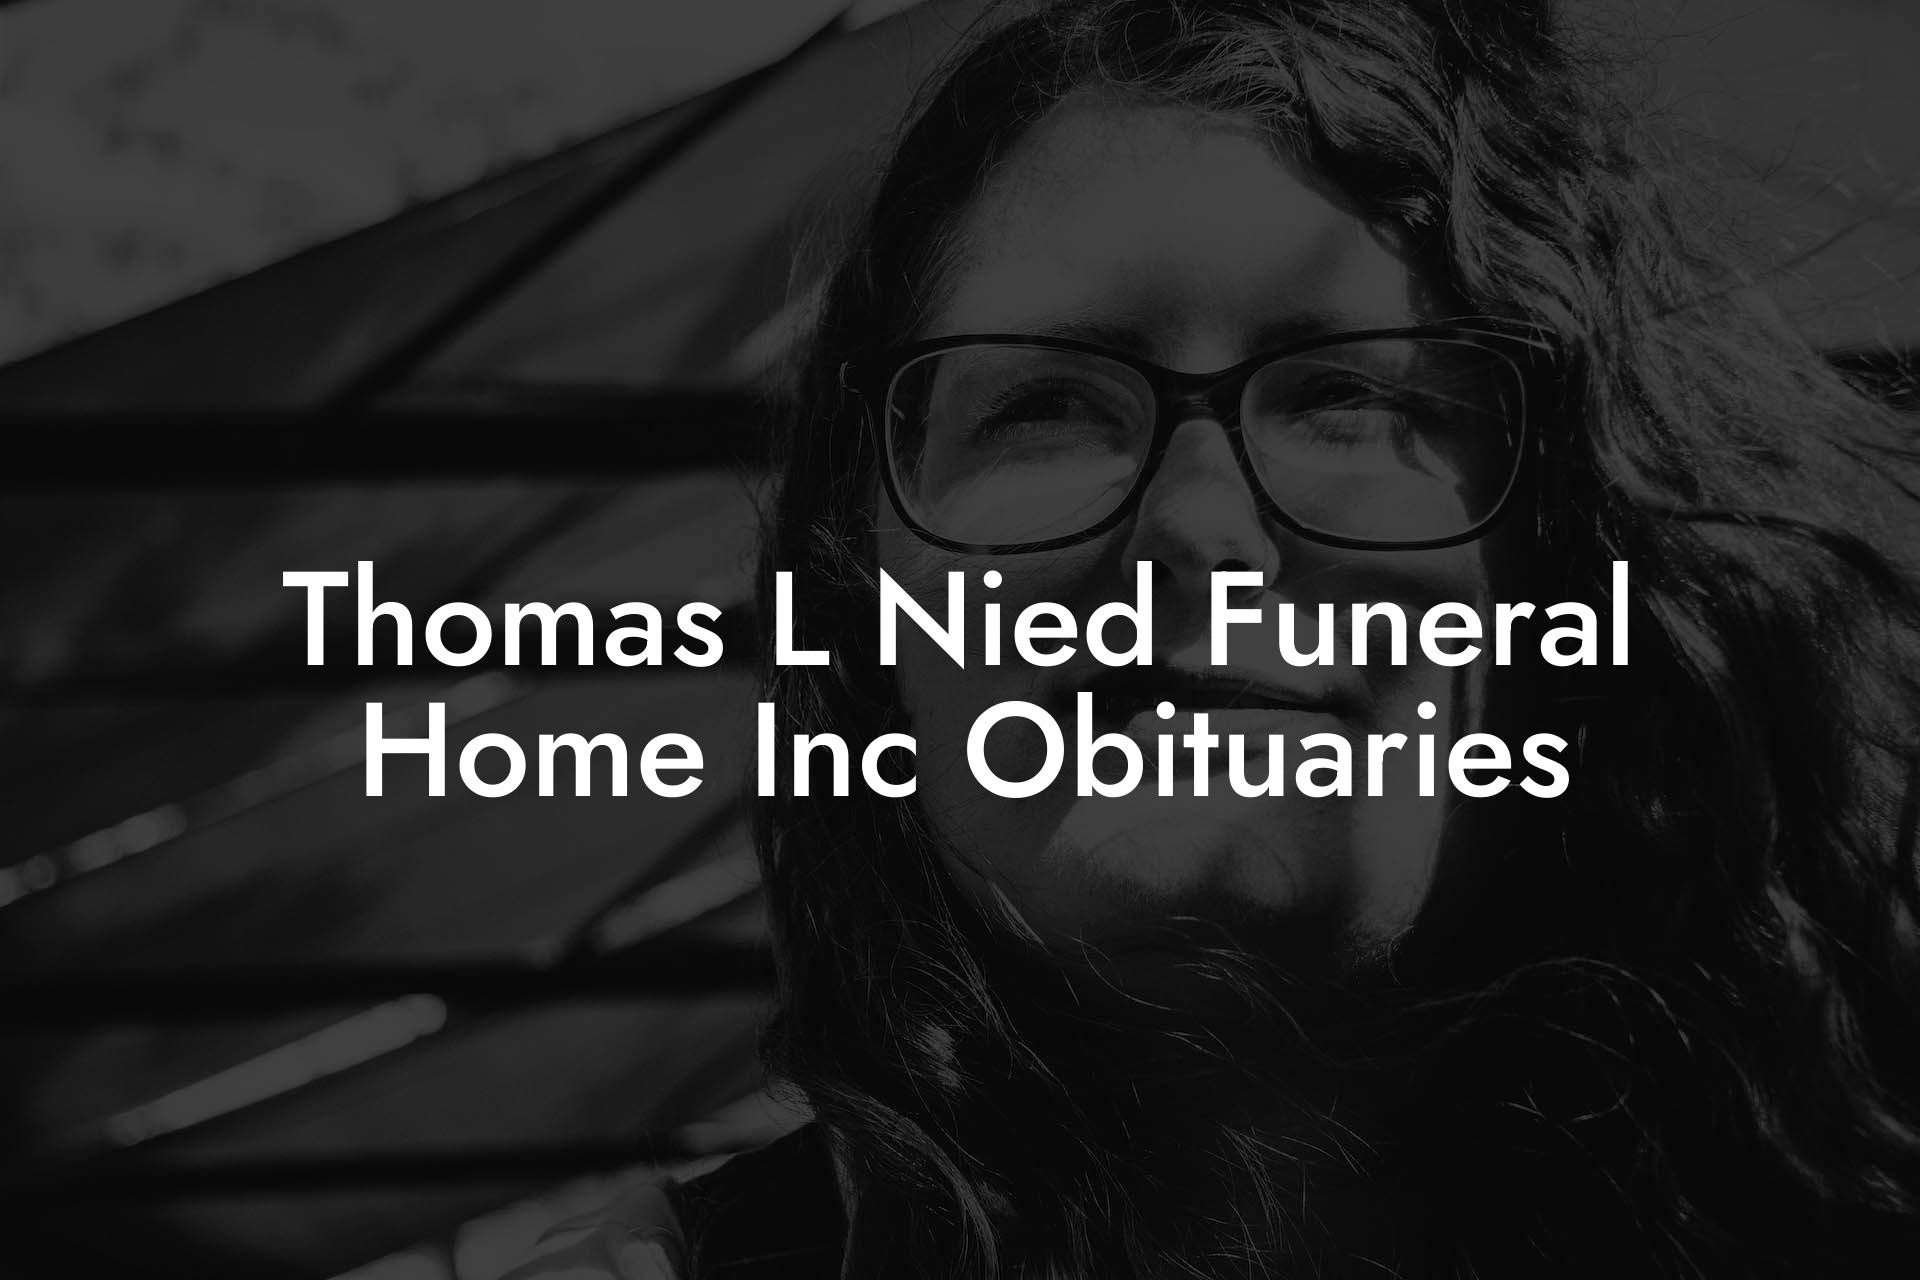 Thomas L. Nied Funeral Home, Inc. Obituaries